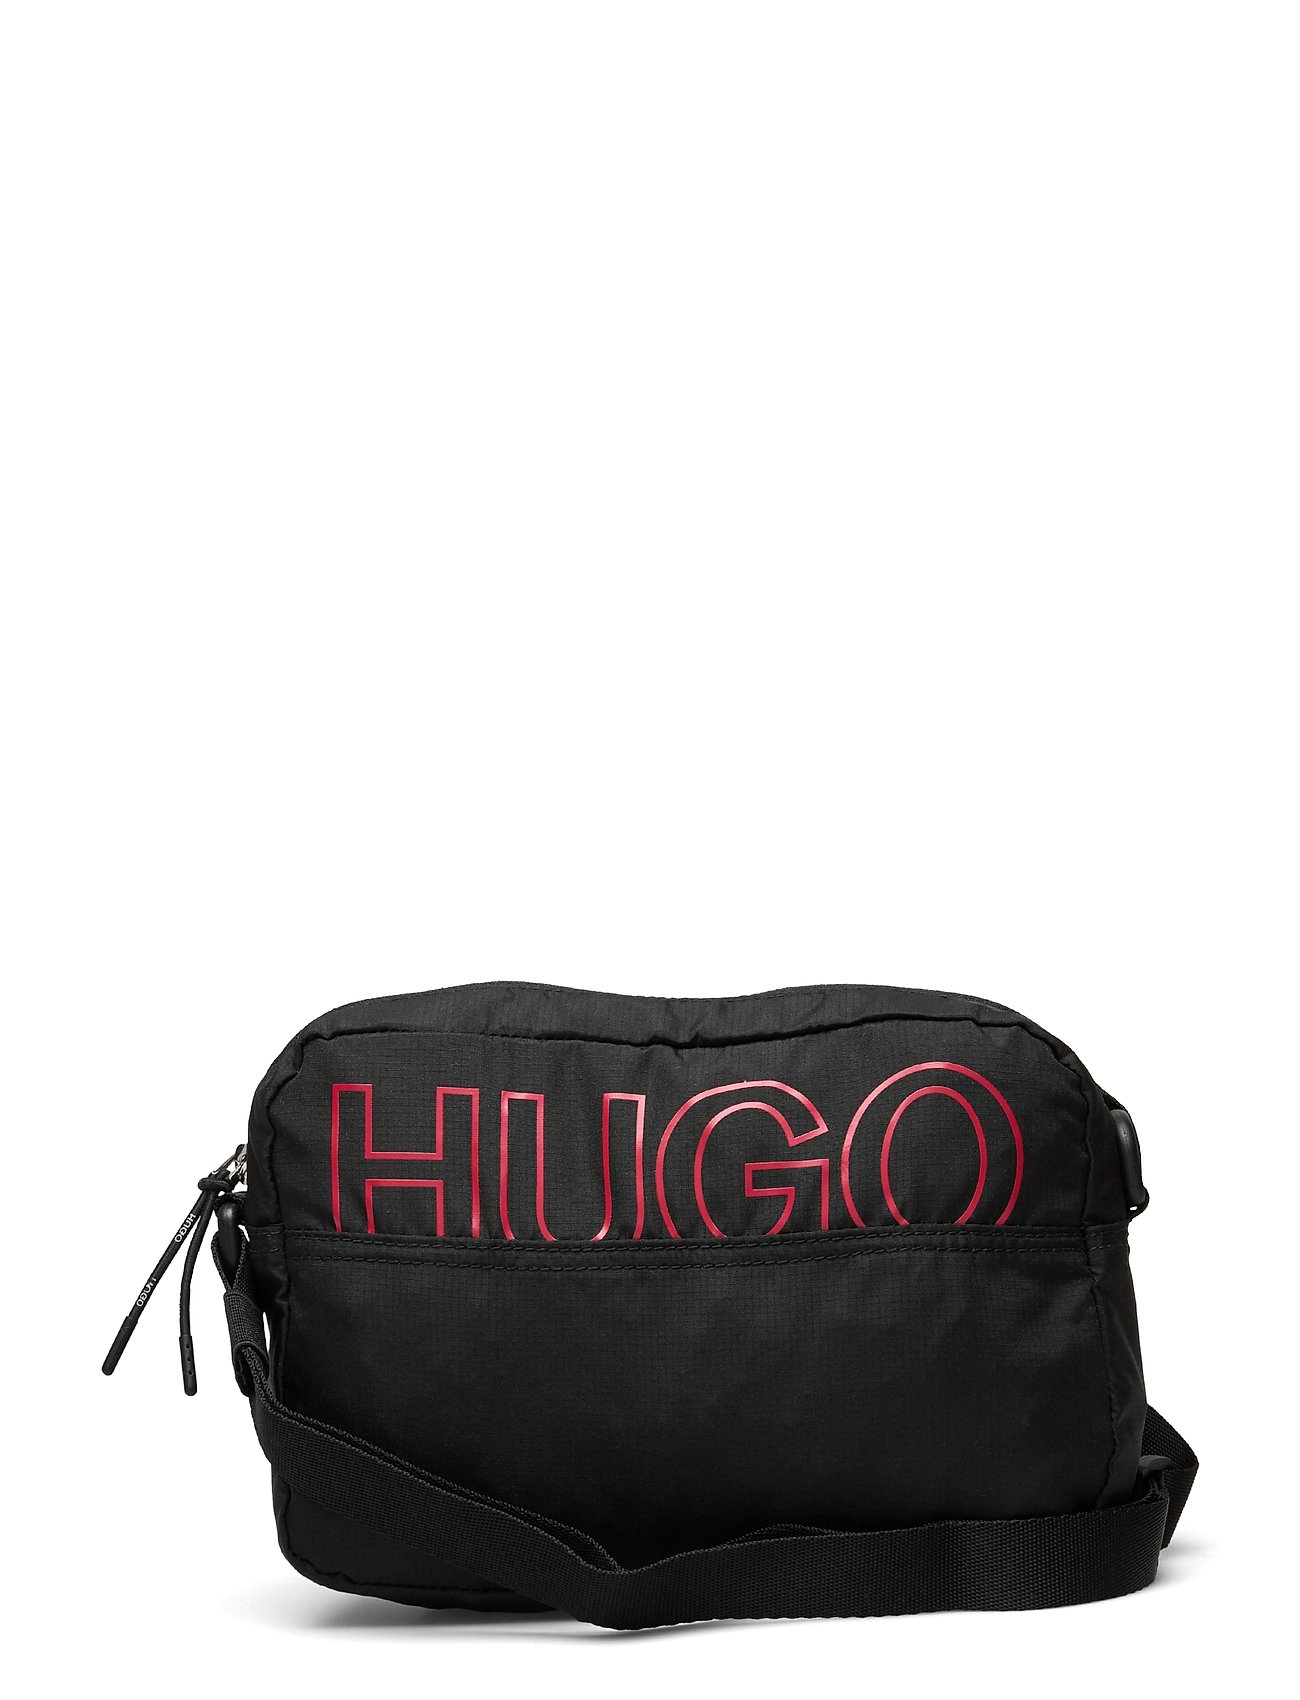 Hugo Boss skuldertasker – Reborn Crossbody Bags Small Shoulder Bags Crossbody Sort HUGO til dame i Sort Pashion.dk